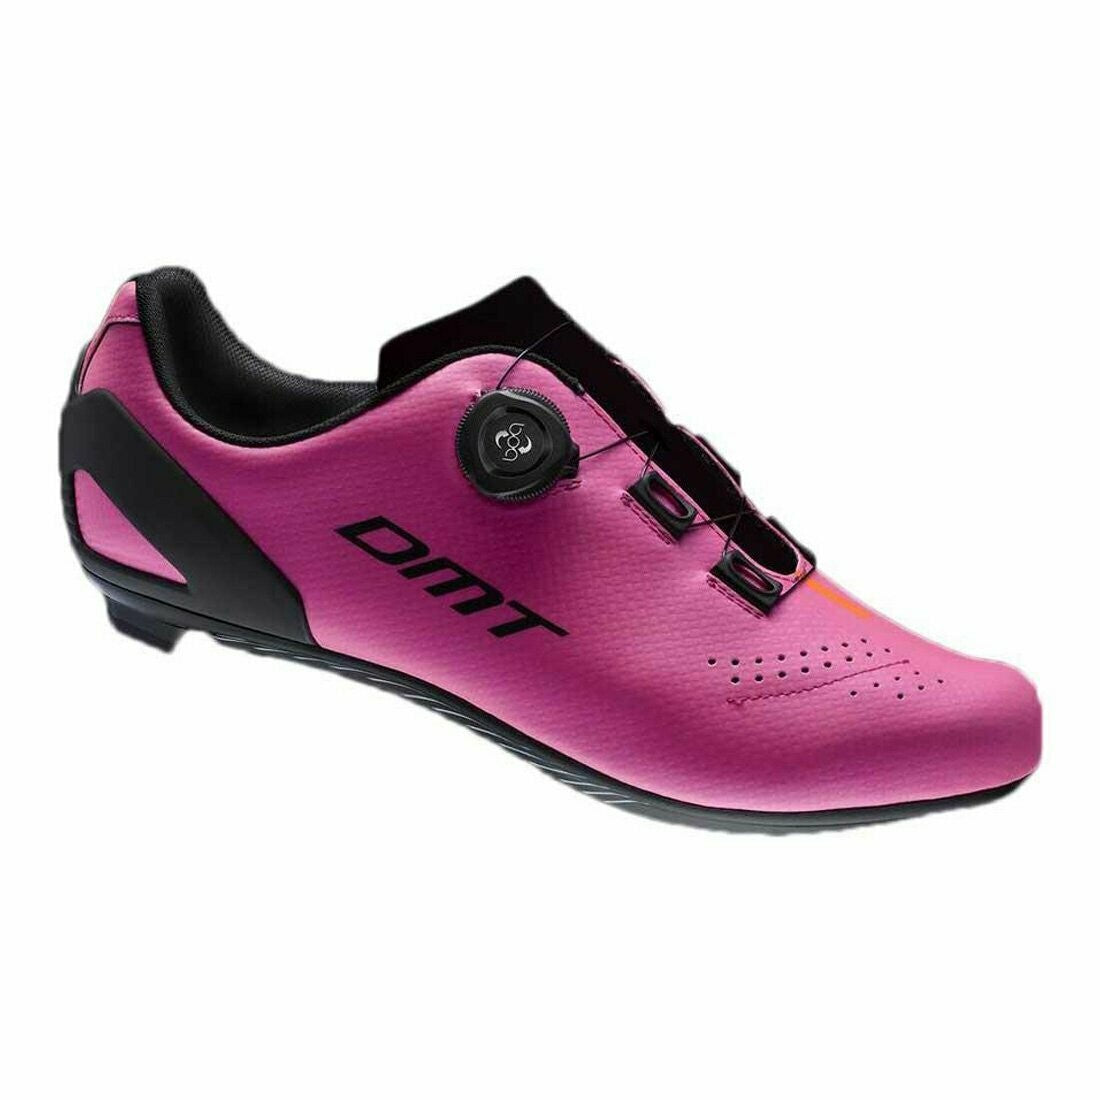 DMT D5 Road Cycling Shoes (Pink Fluo/Black/Orange)